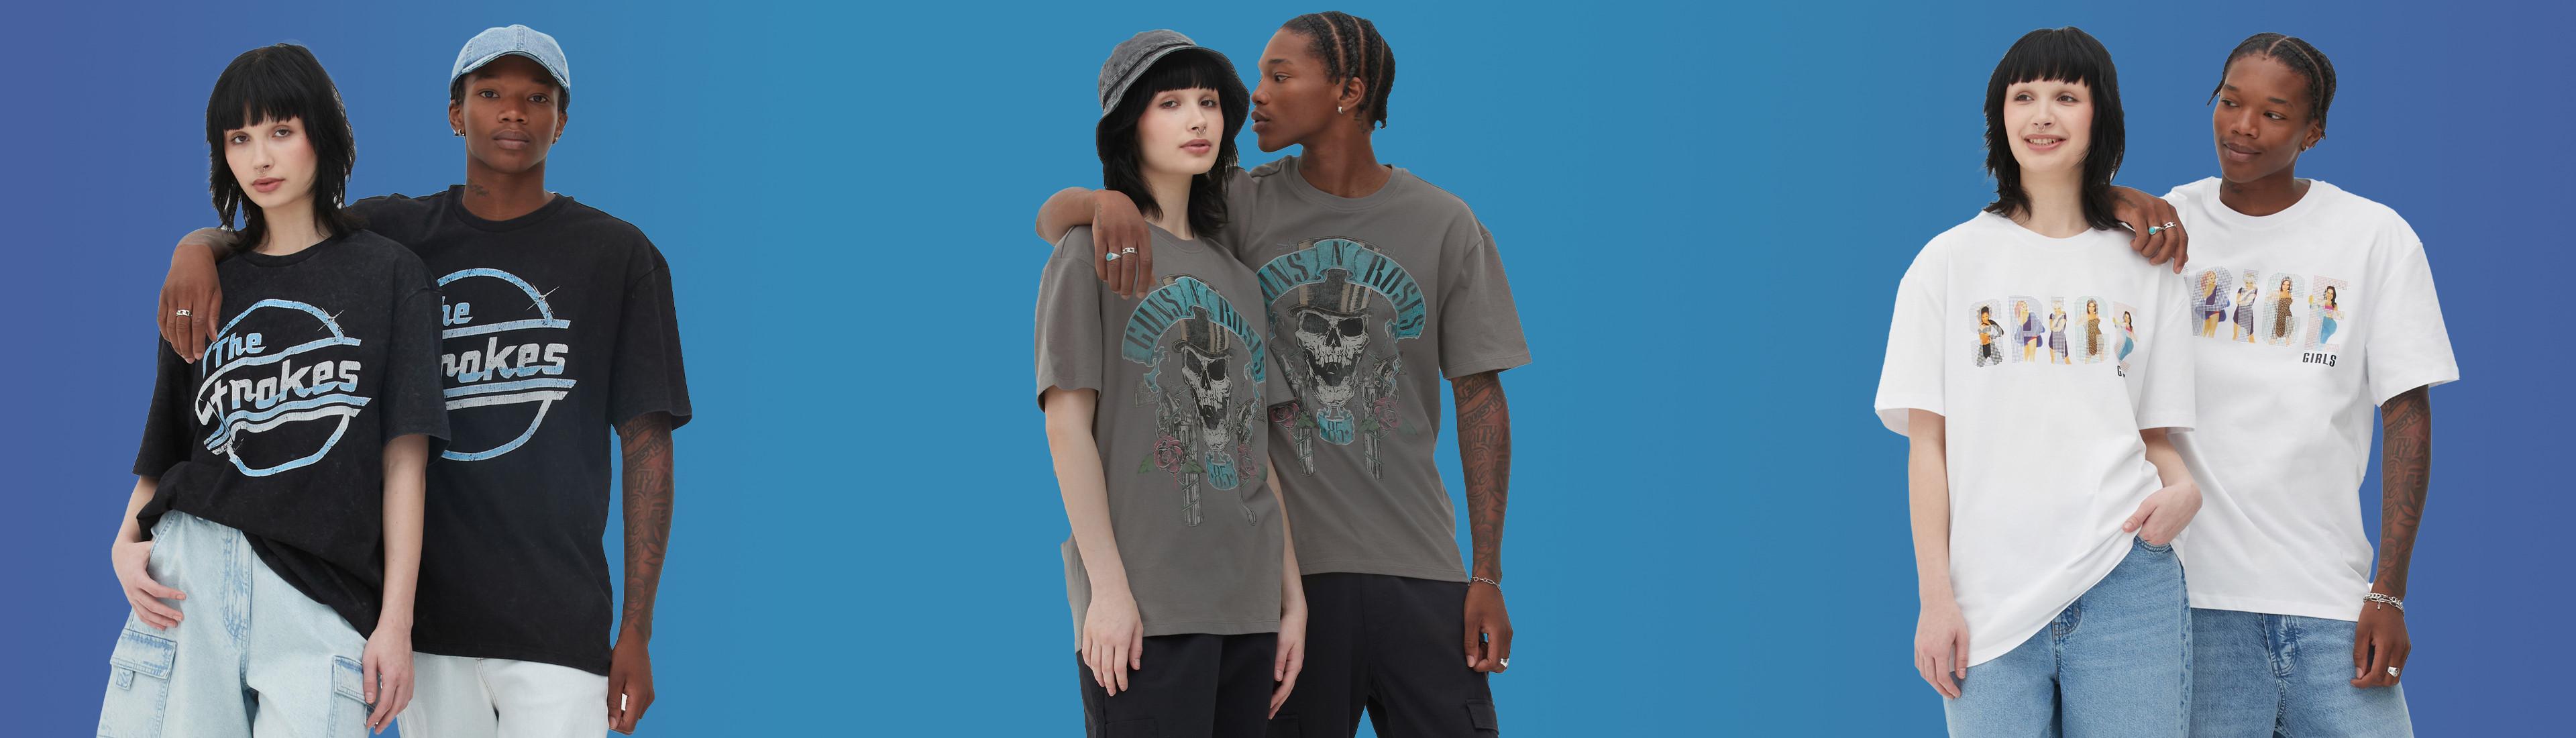 Modelli che indossano T-shirt di gruppi musicali nere, grigie e bianche